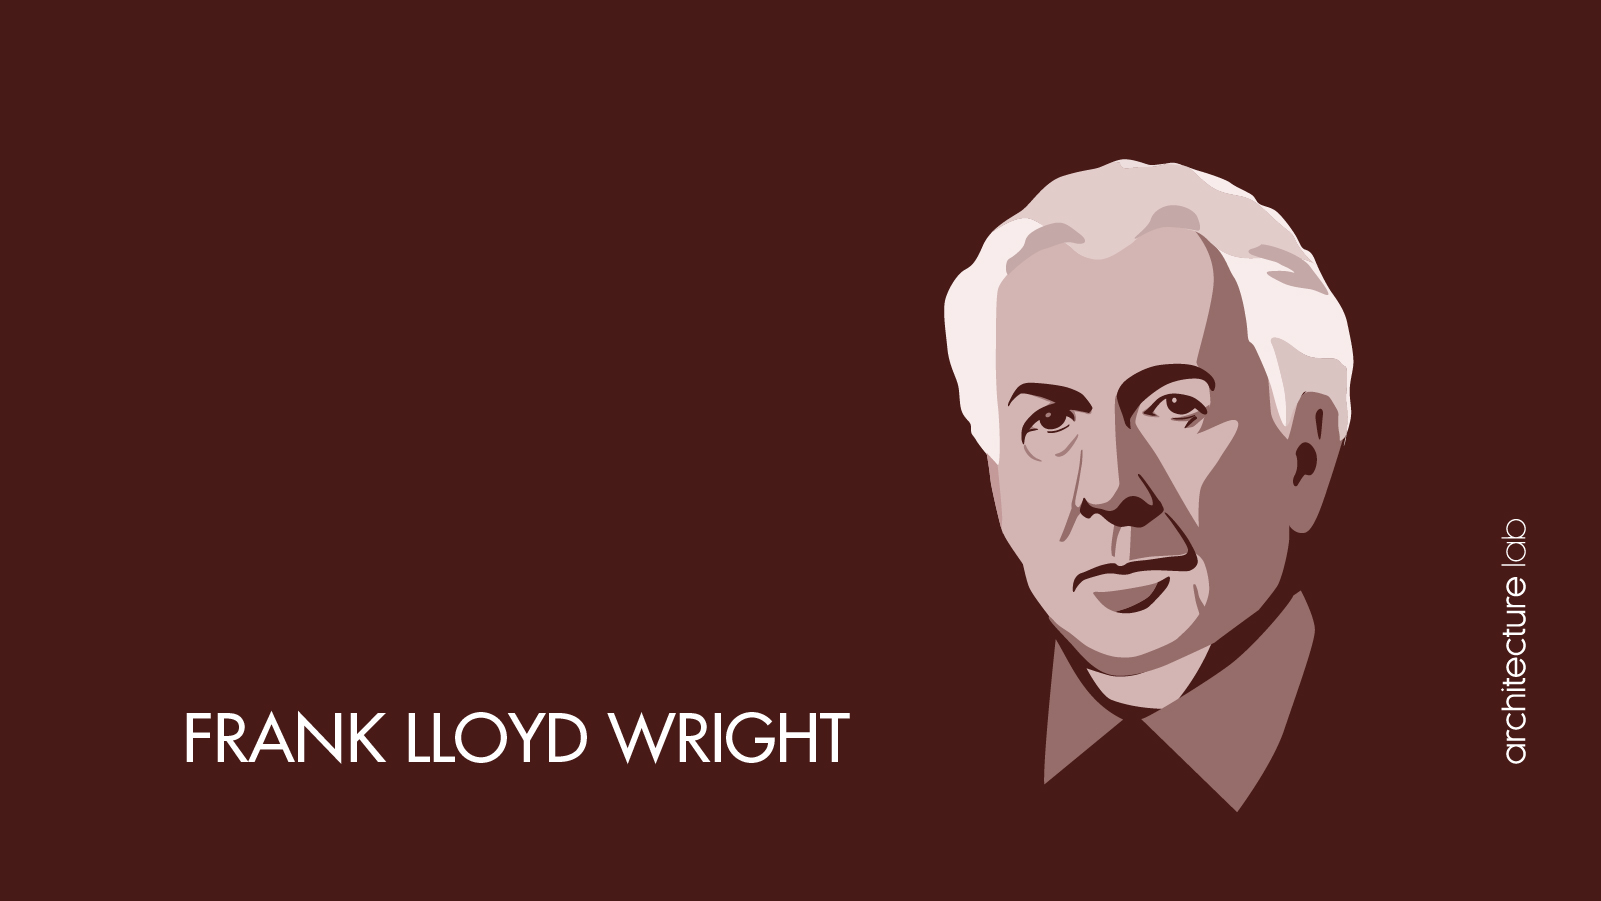 Frank lloyd wright: biography, works, awards